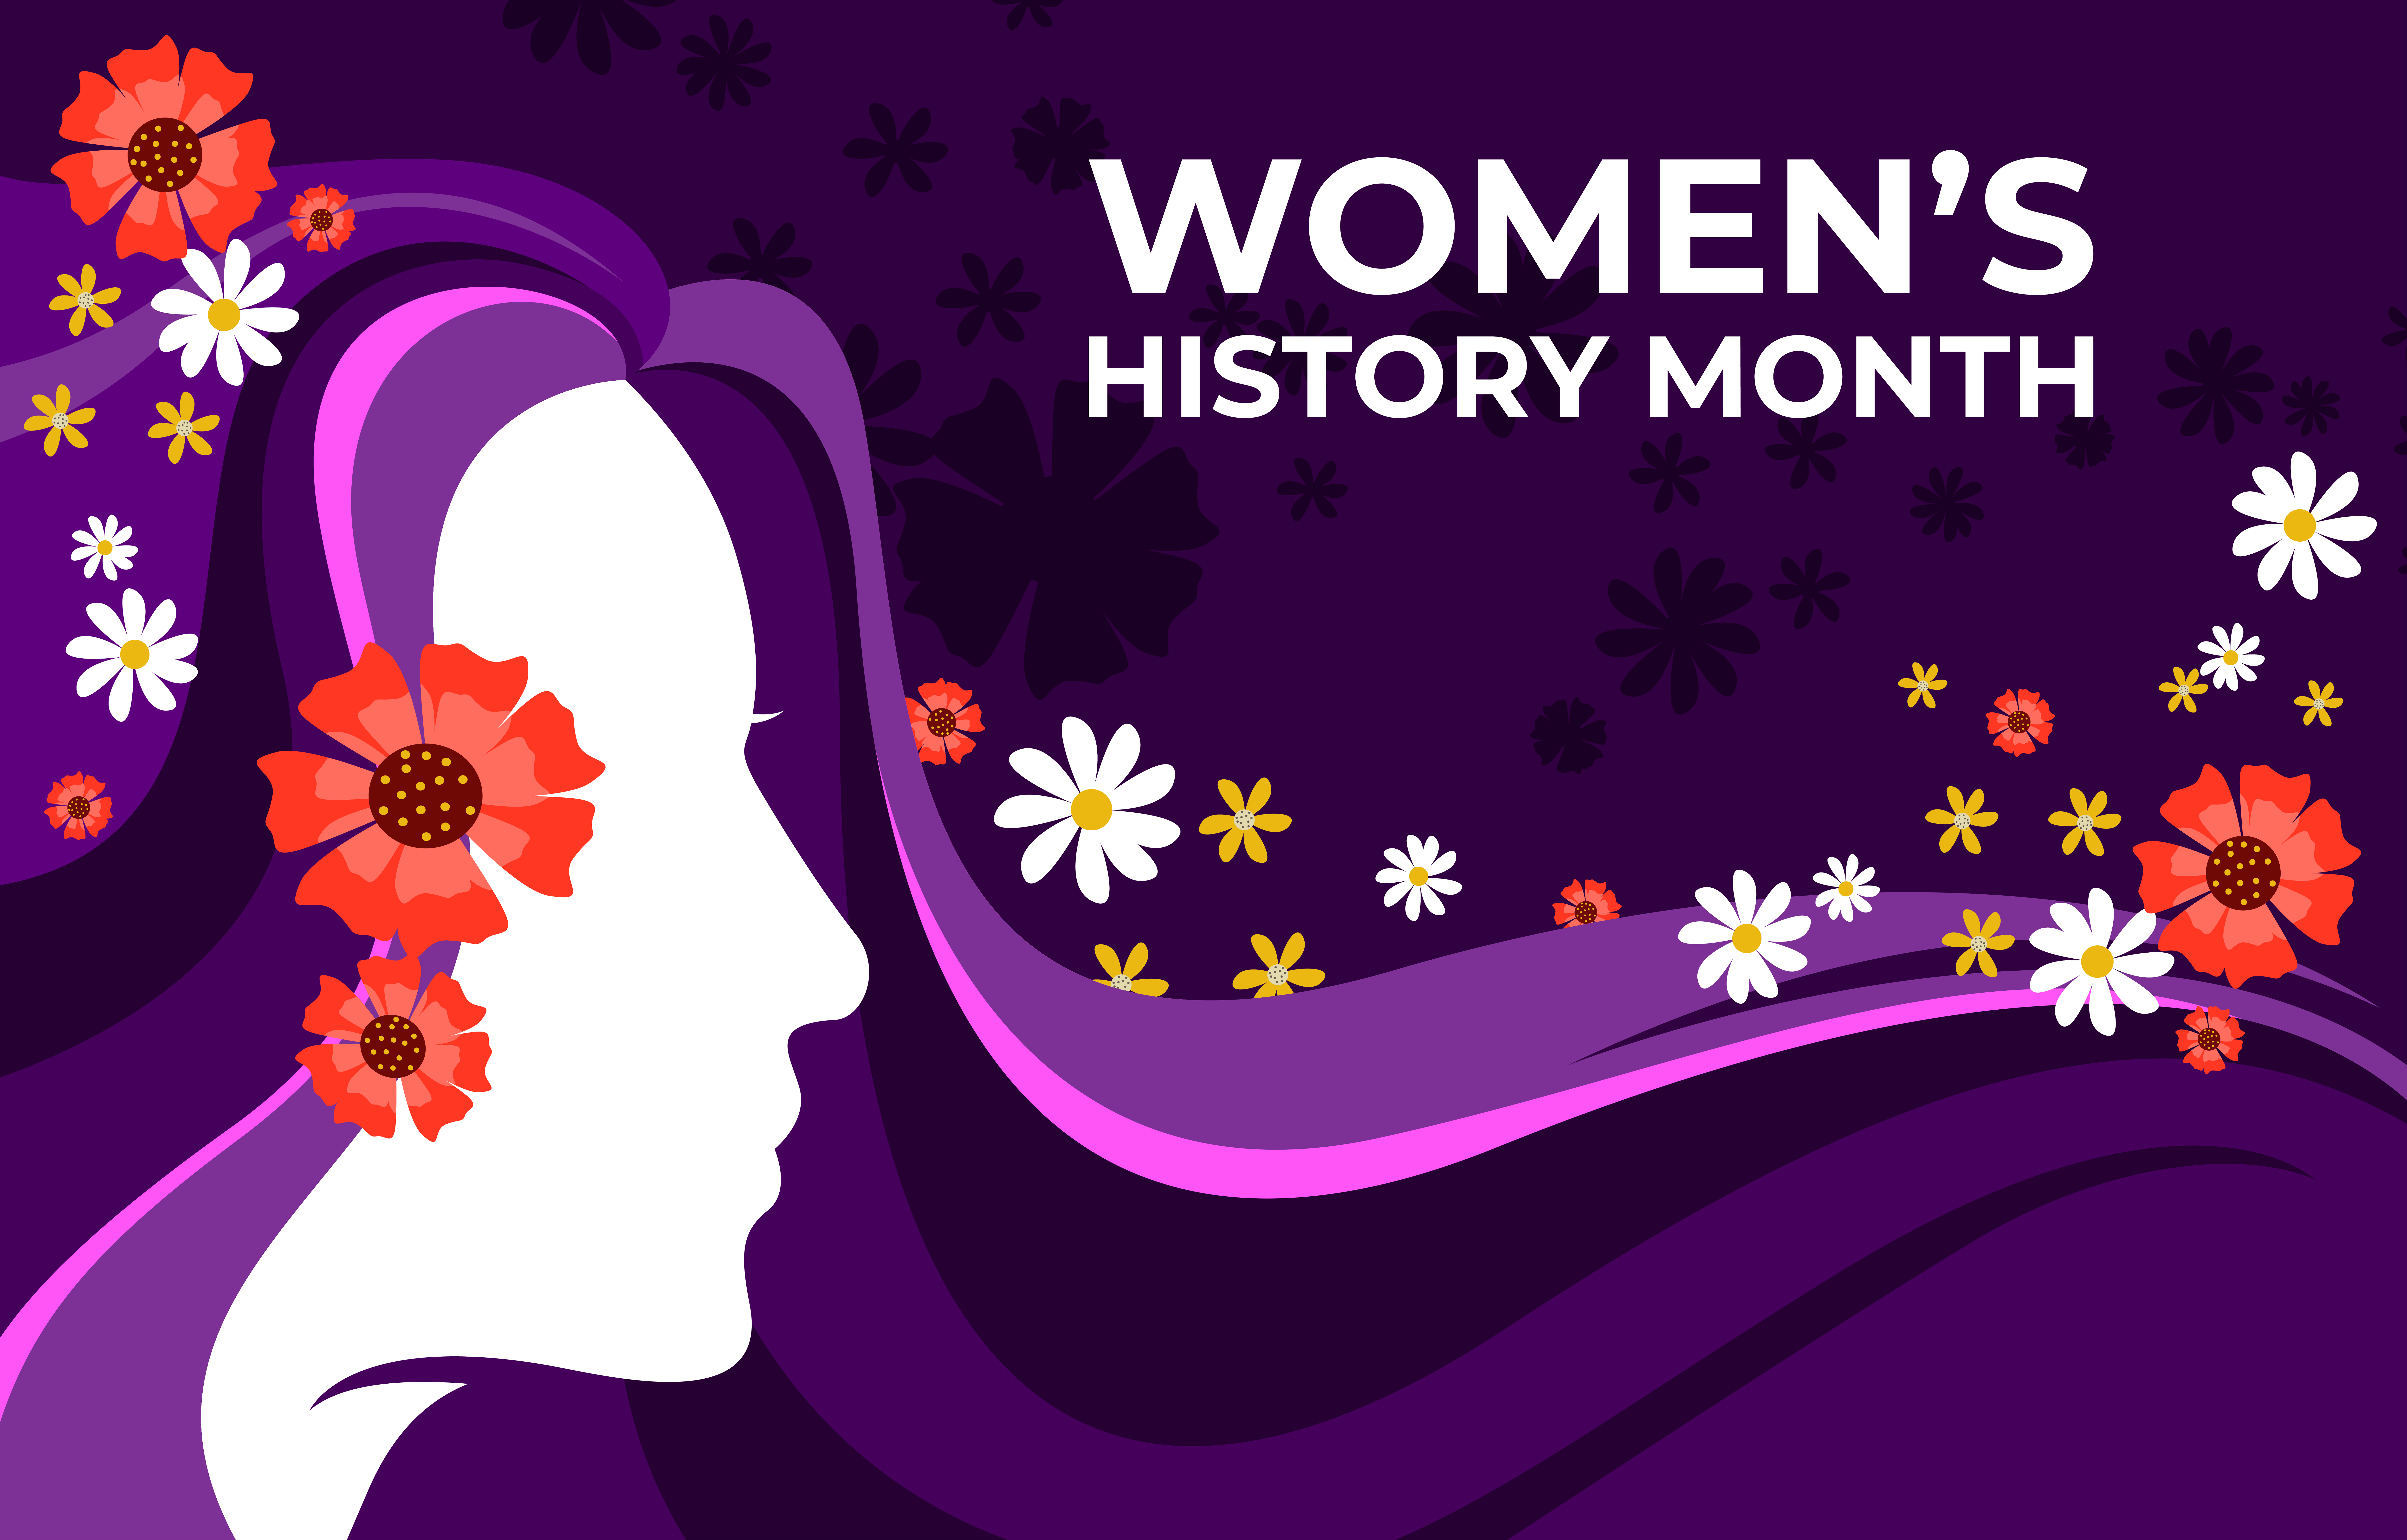 Celebrating Women’s History Month!